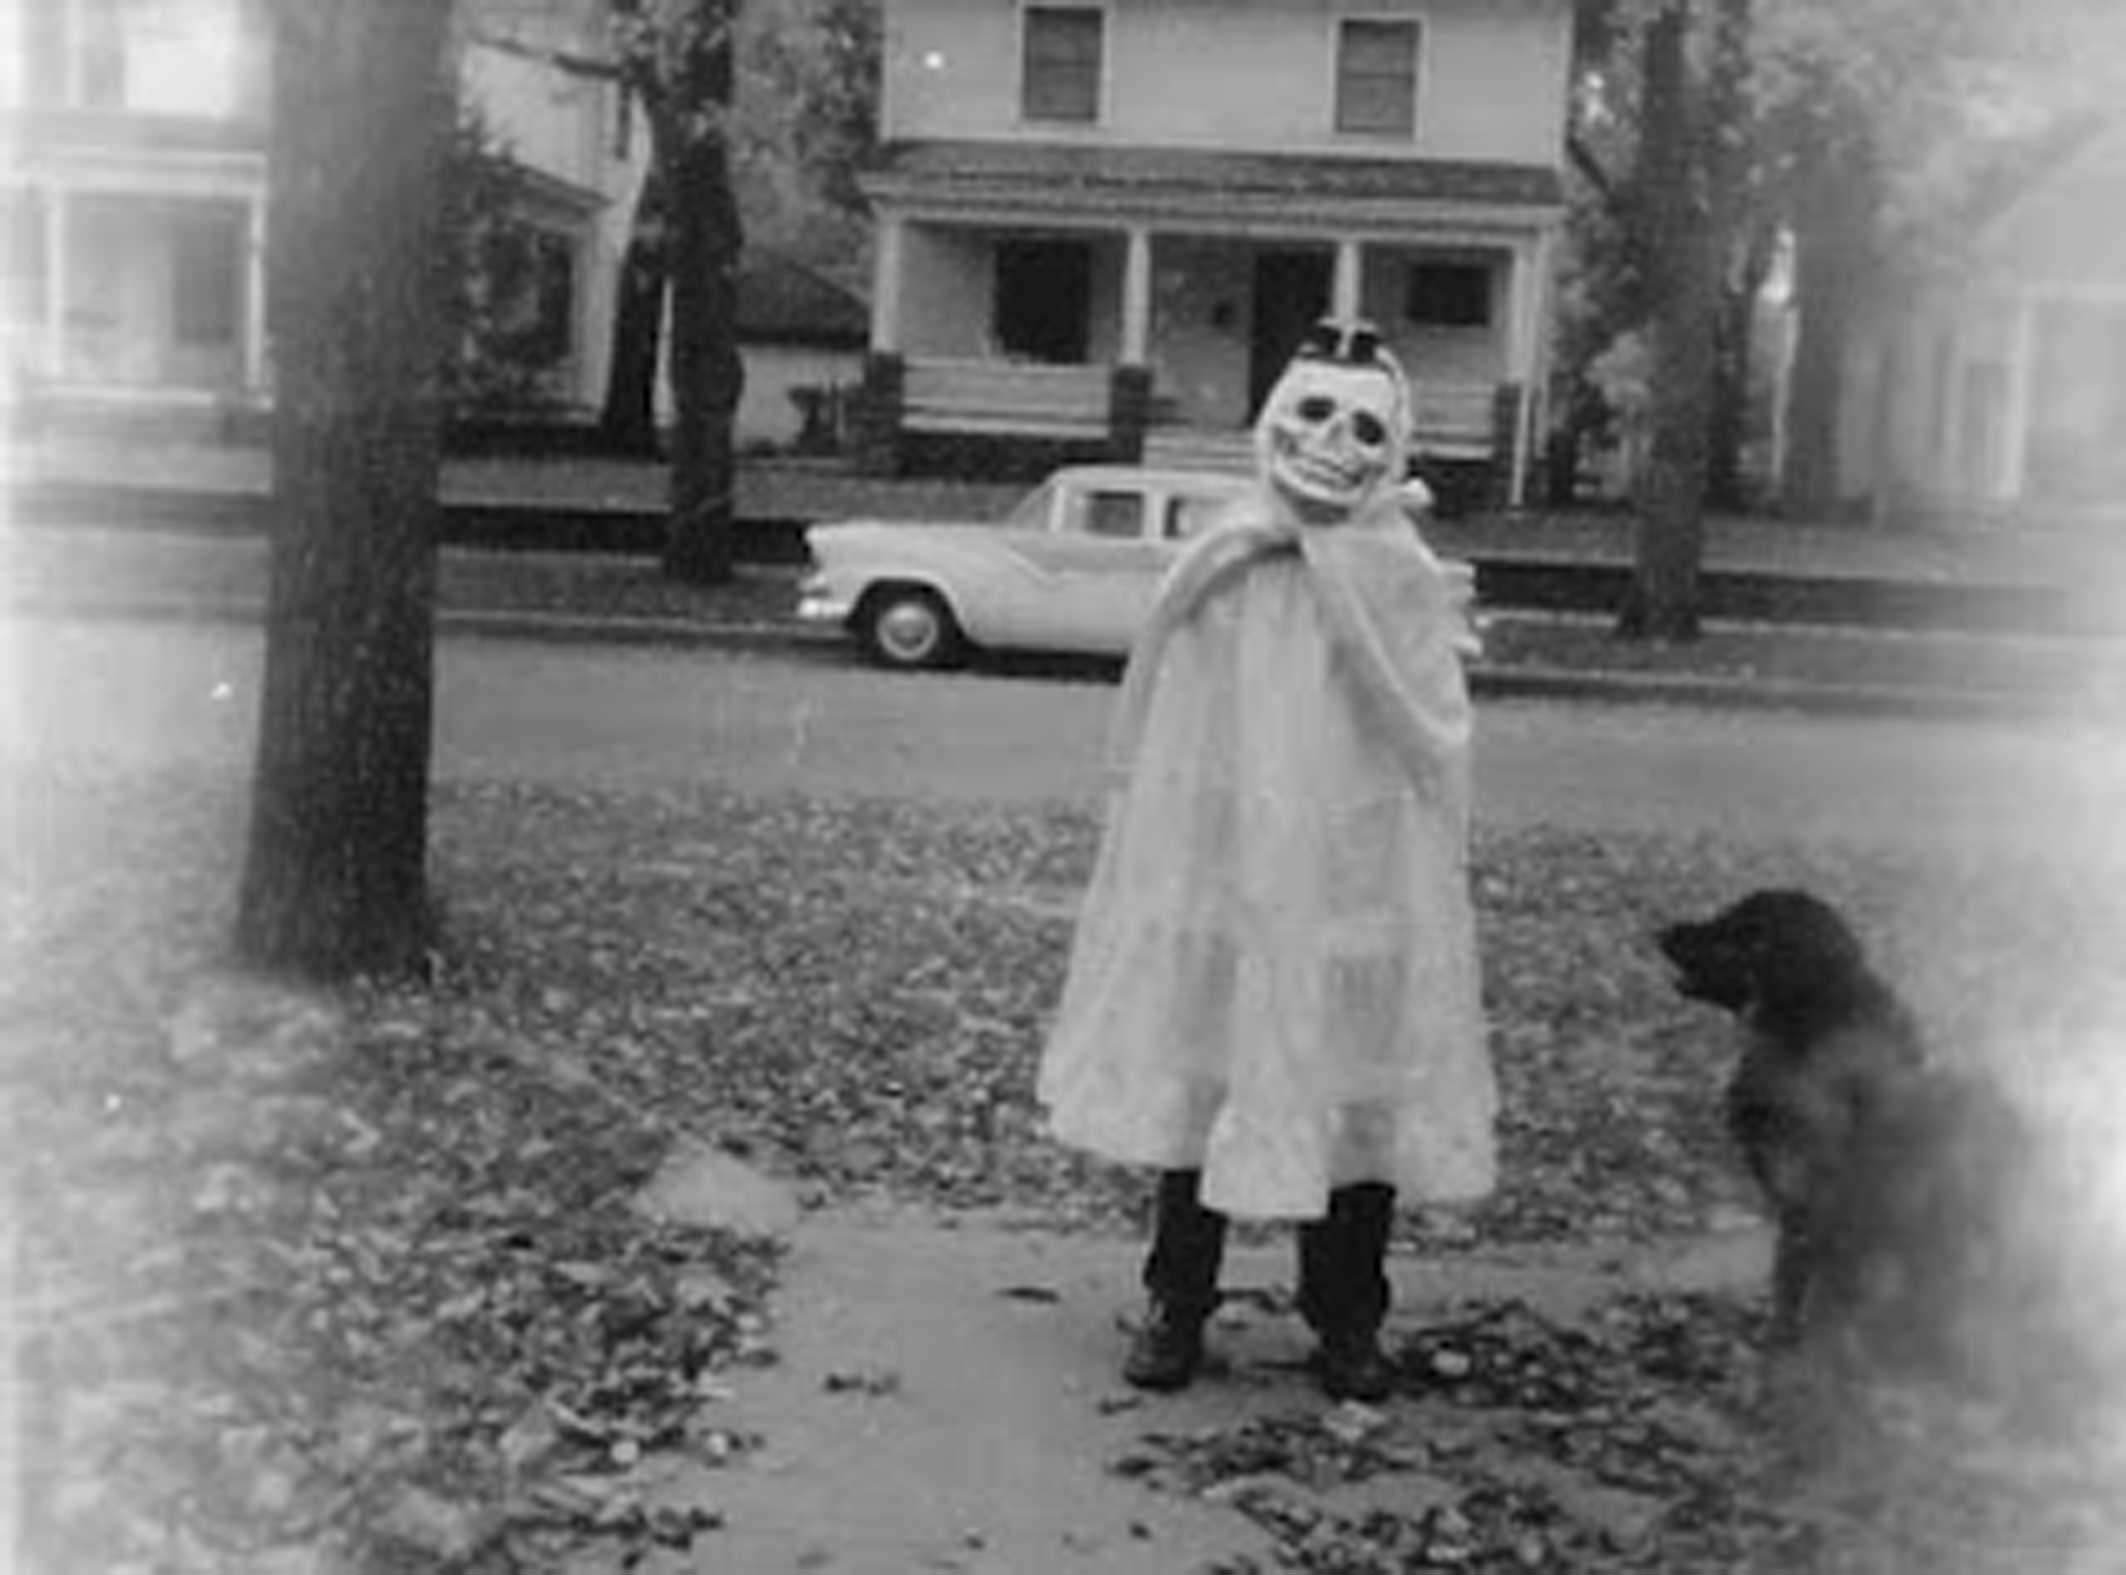 vintage halloween costumes